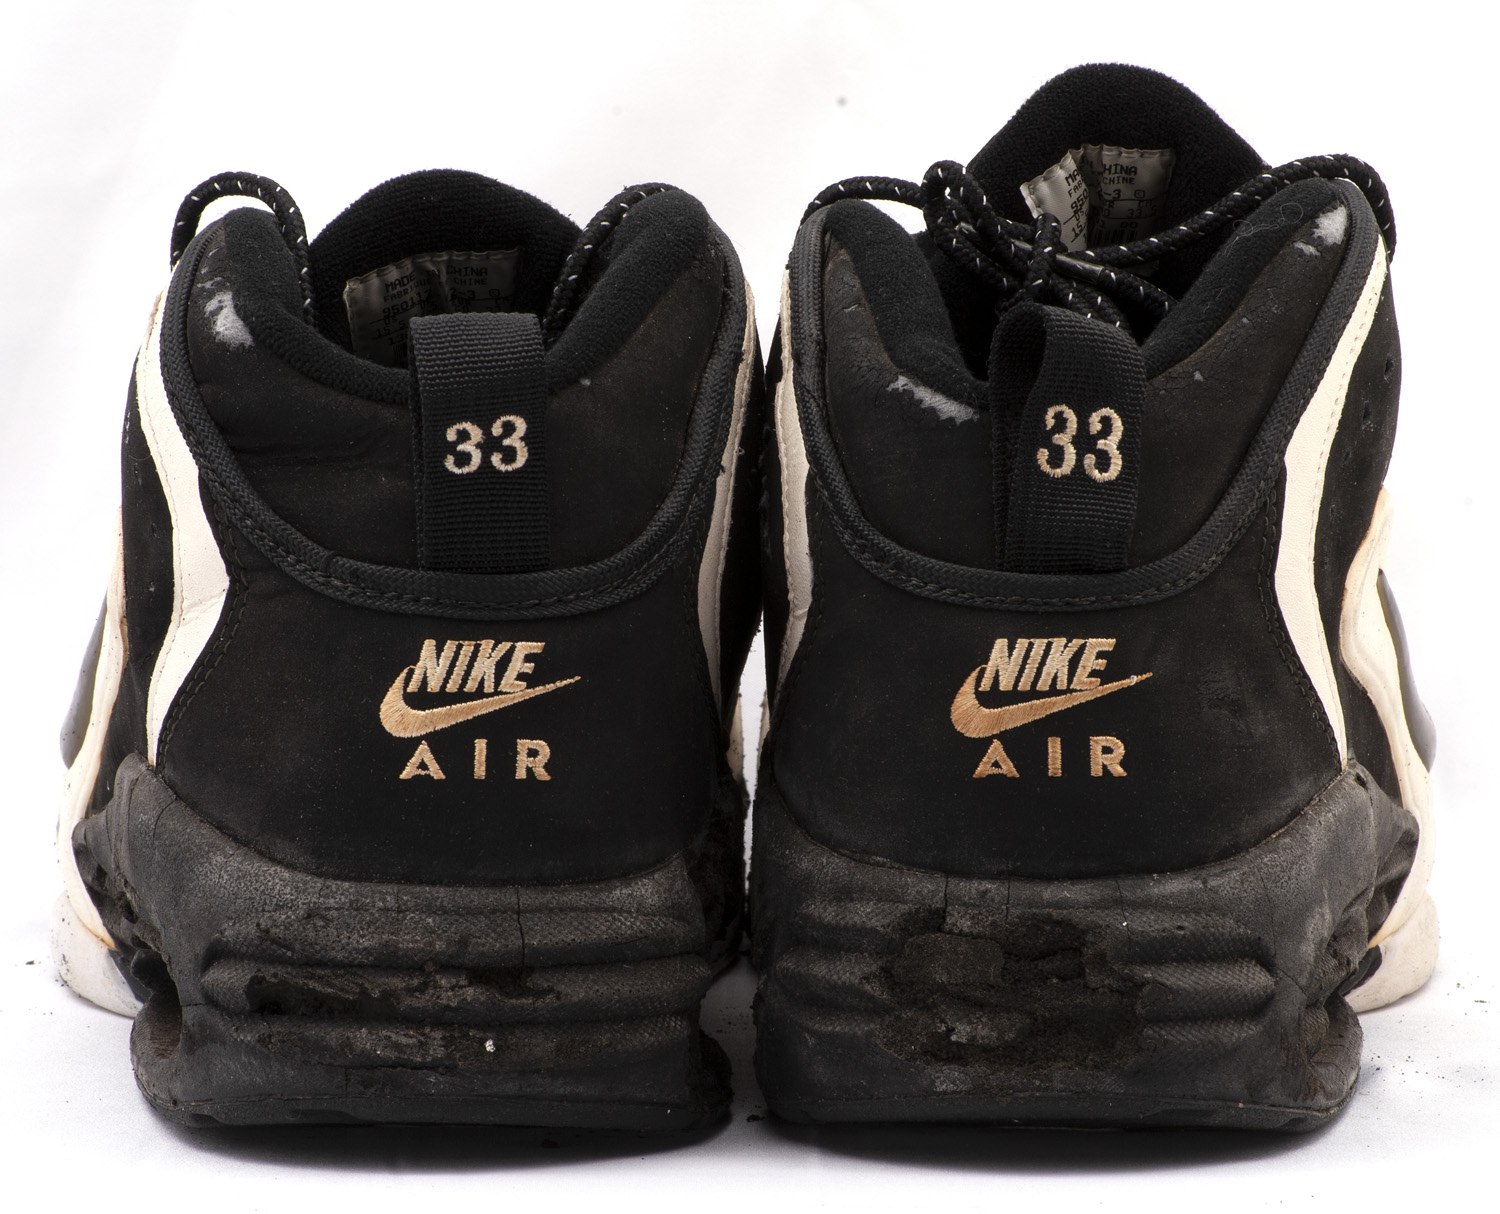 Circa 2000 Scottie Pippen Game Worn Shoes. Basketball